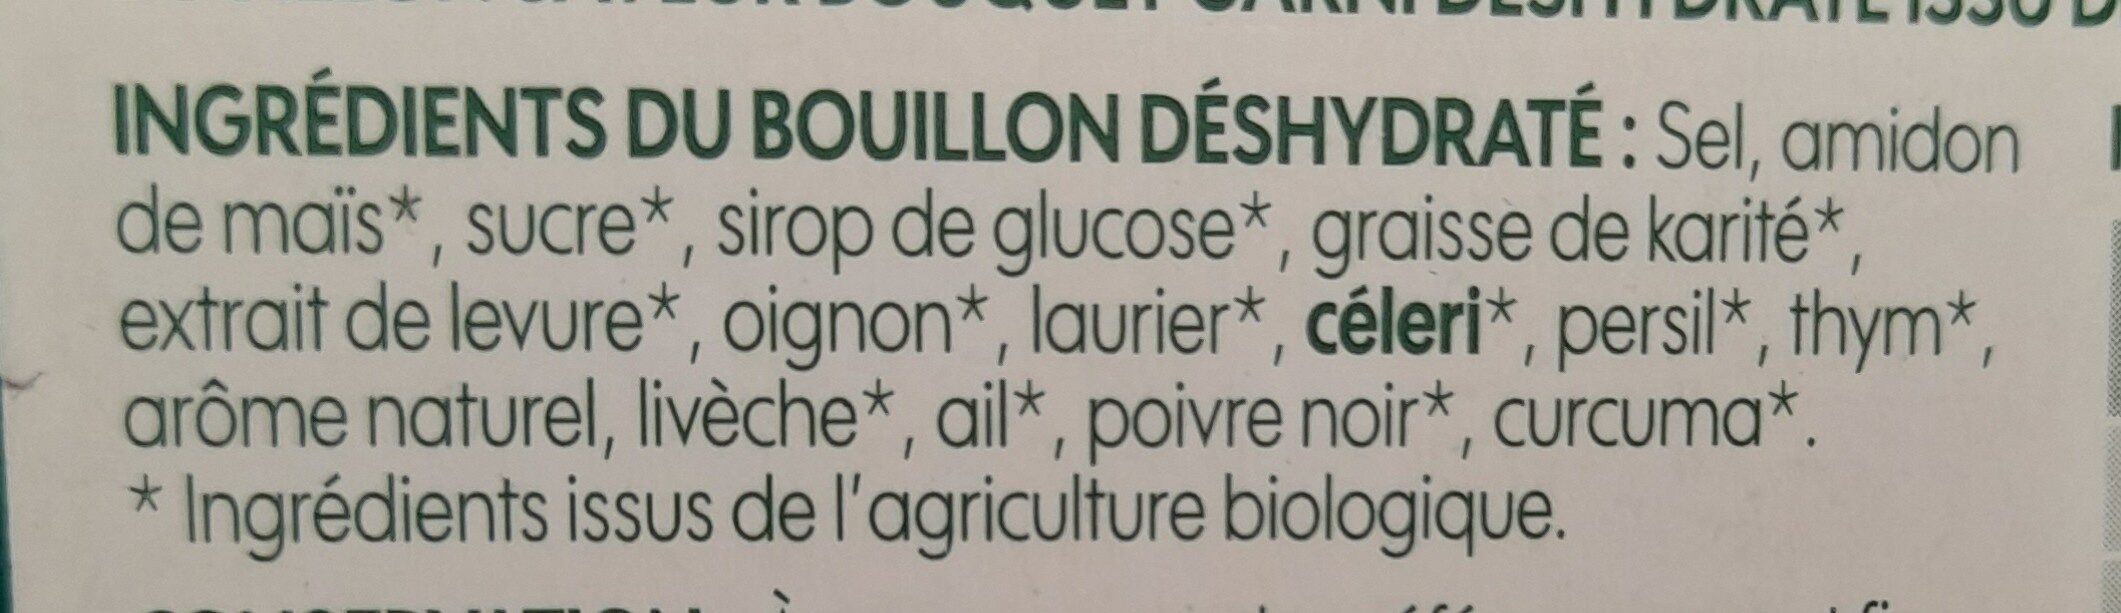 Bouillon saveur bouquet garni - Ingredients - fr